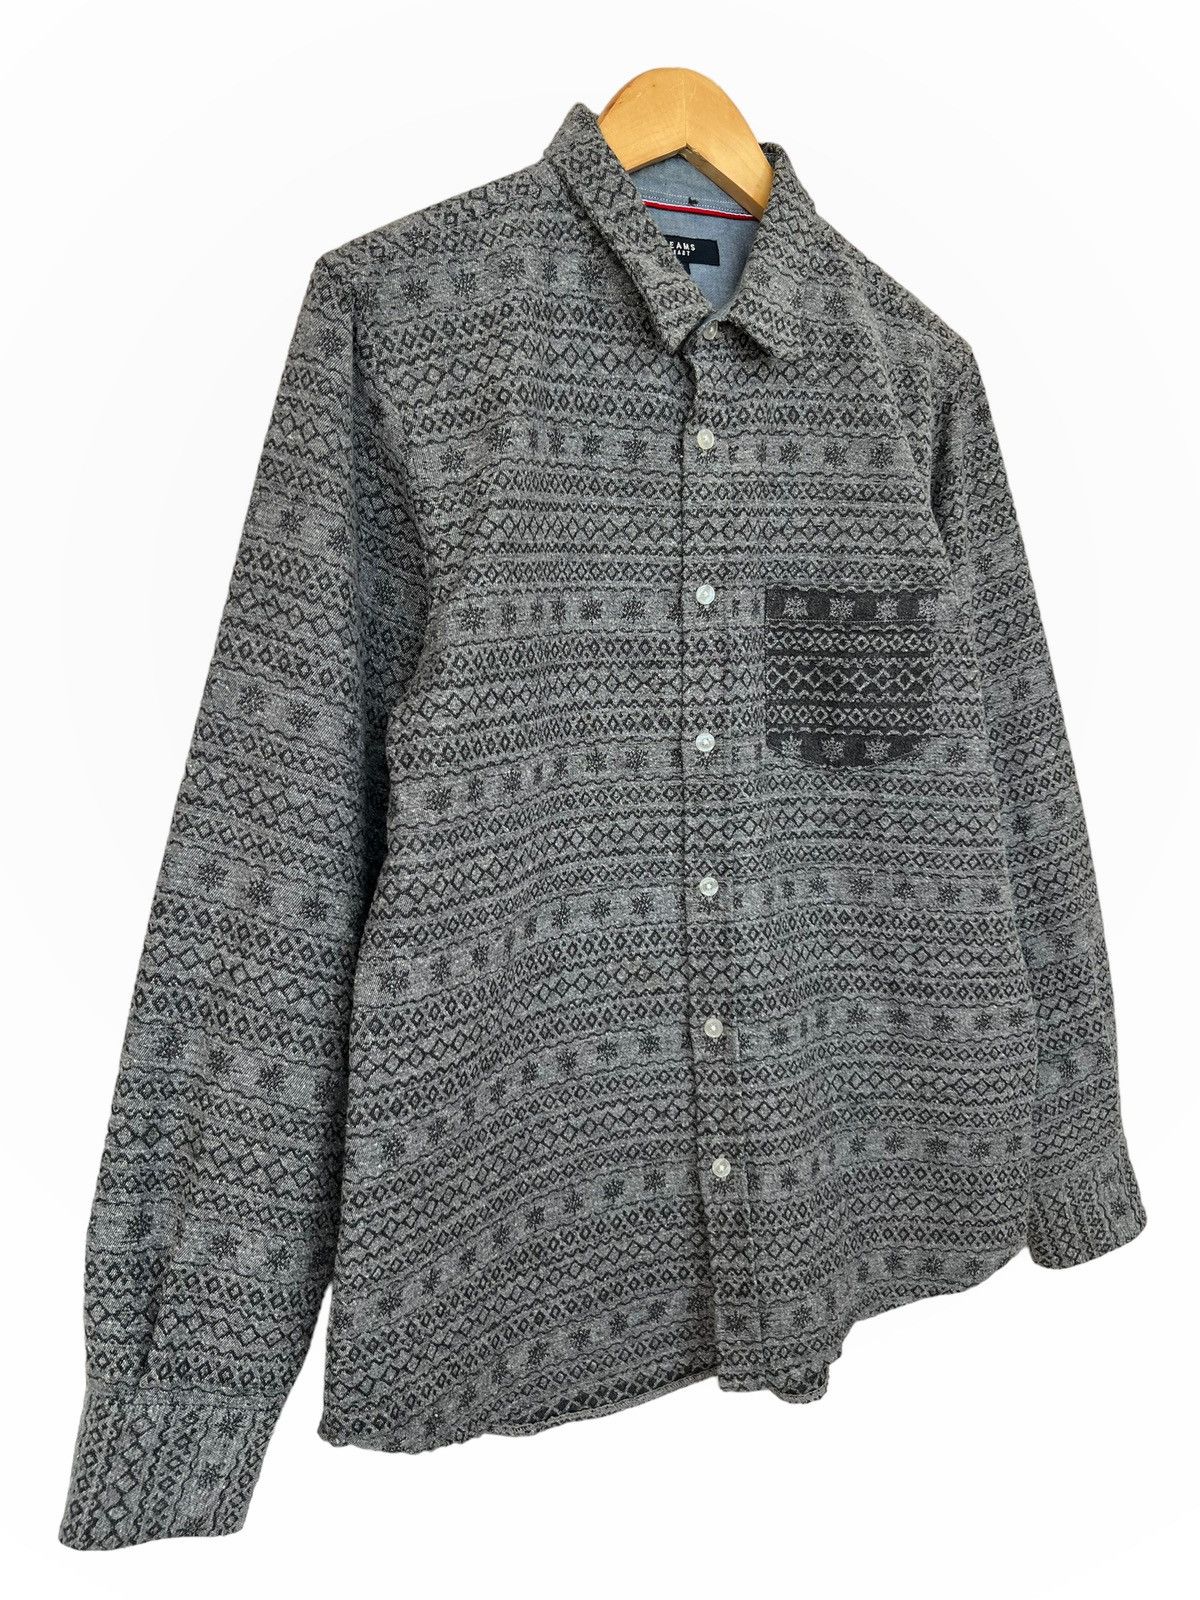 Beams Japan Checkered Long Sleeve Button Up Flanner Shirt M - 3